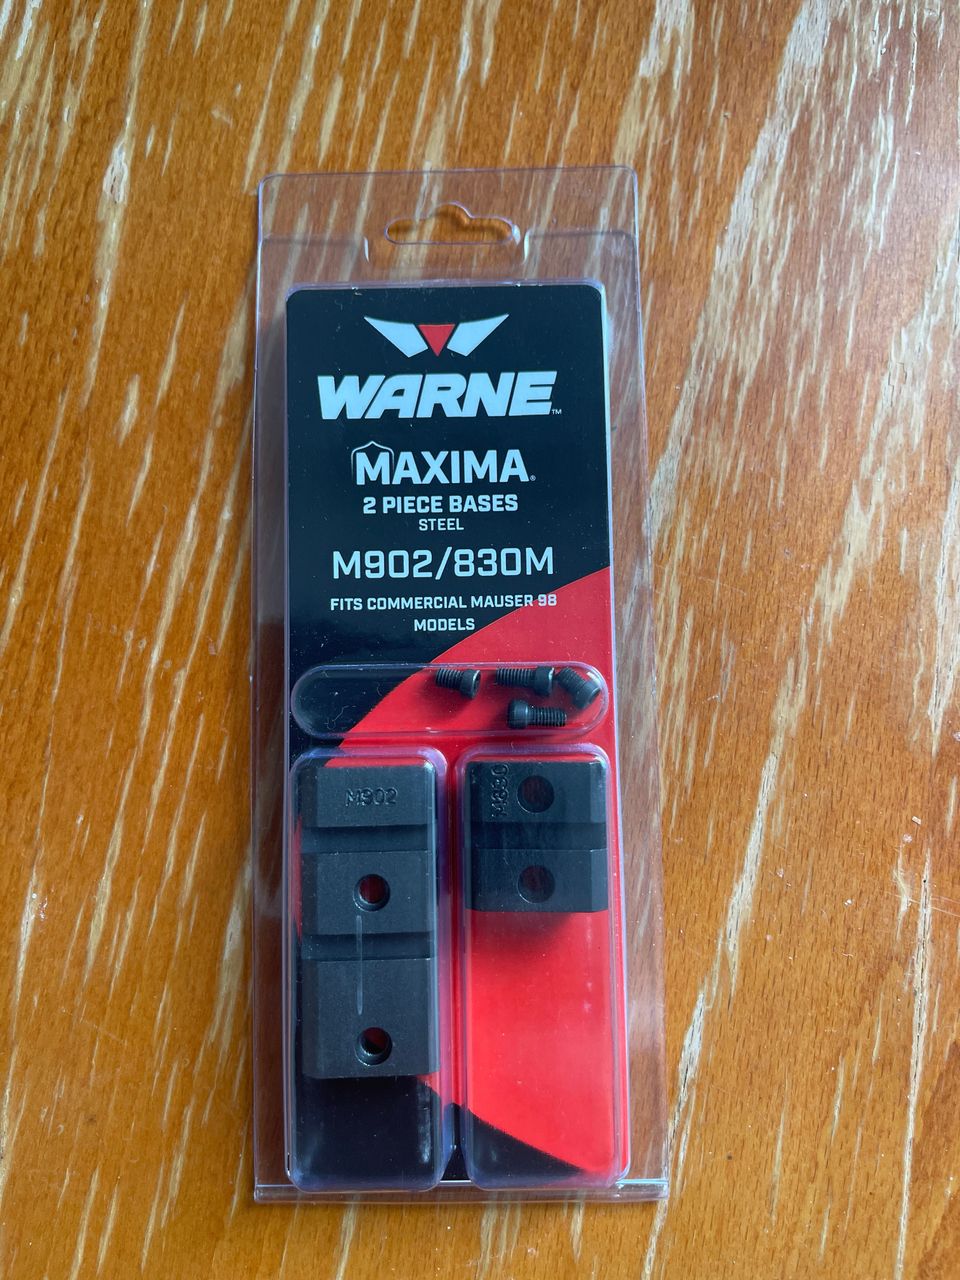 Warne Maxima M902/830M weaver kiinnikkeet